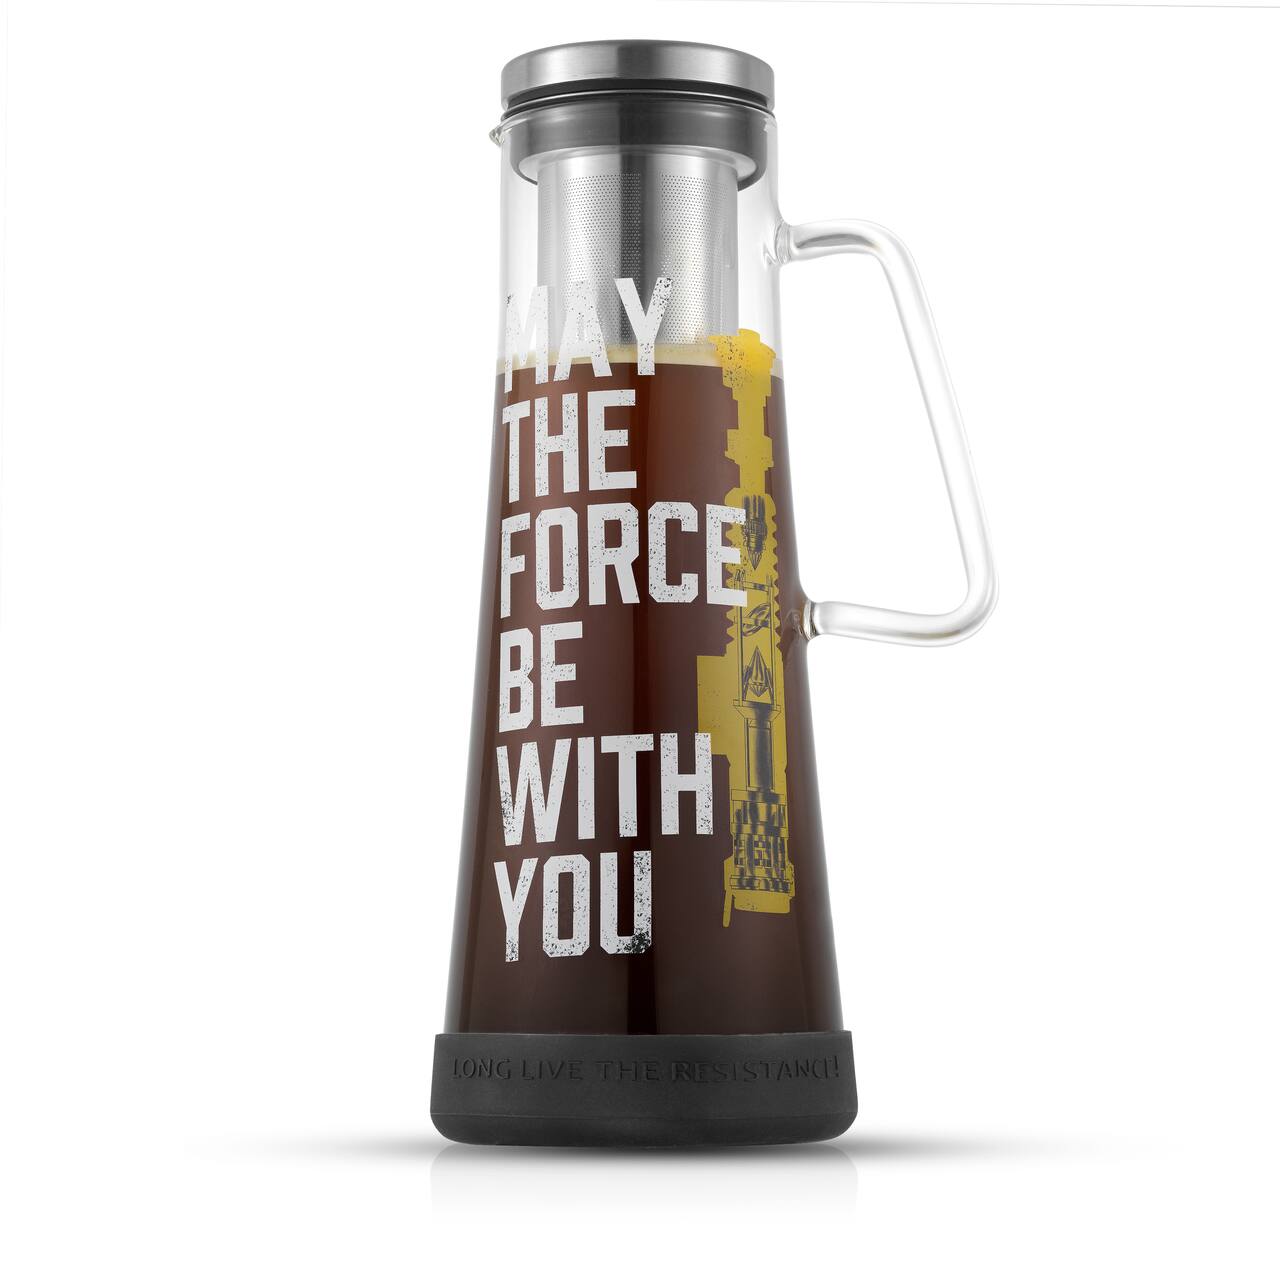 Star Wars Force Cold Brew Glass Pitcher - 1 L (32 oz)